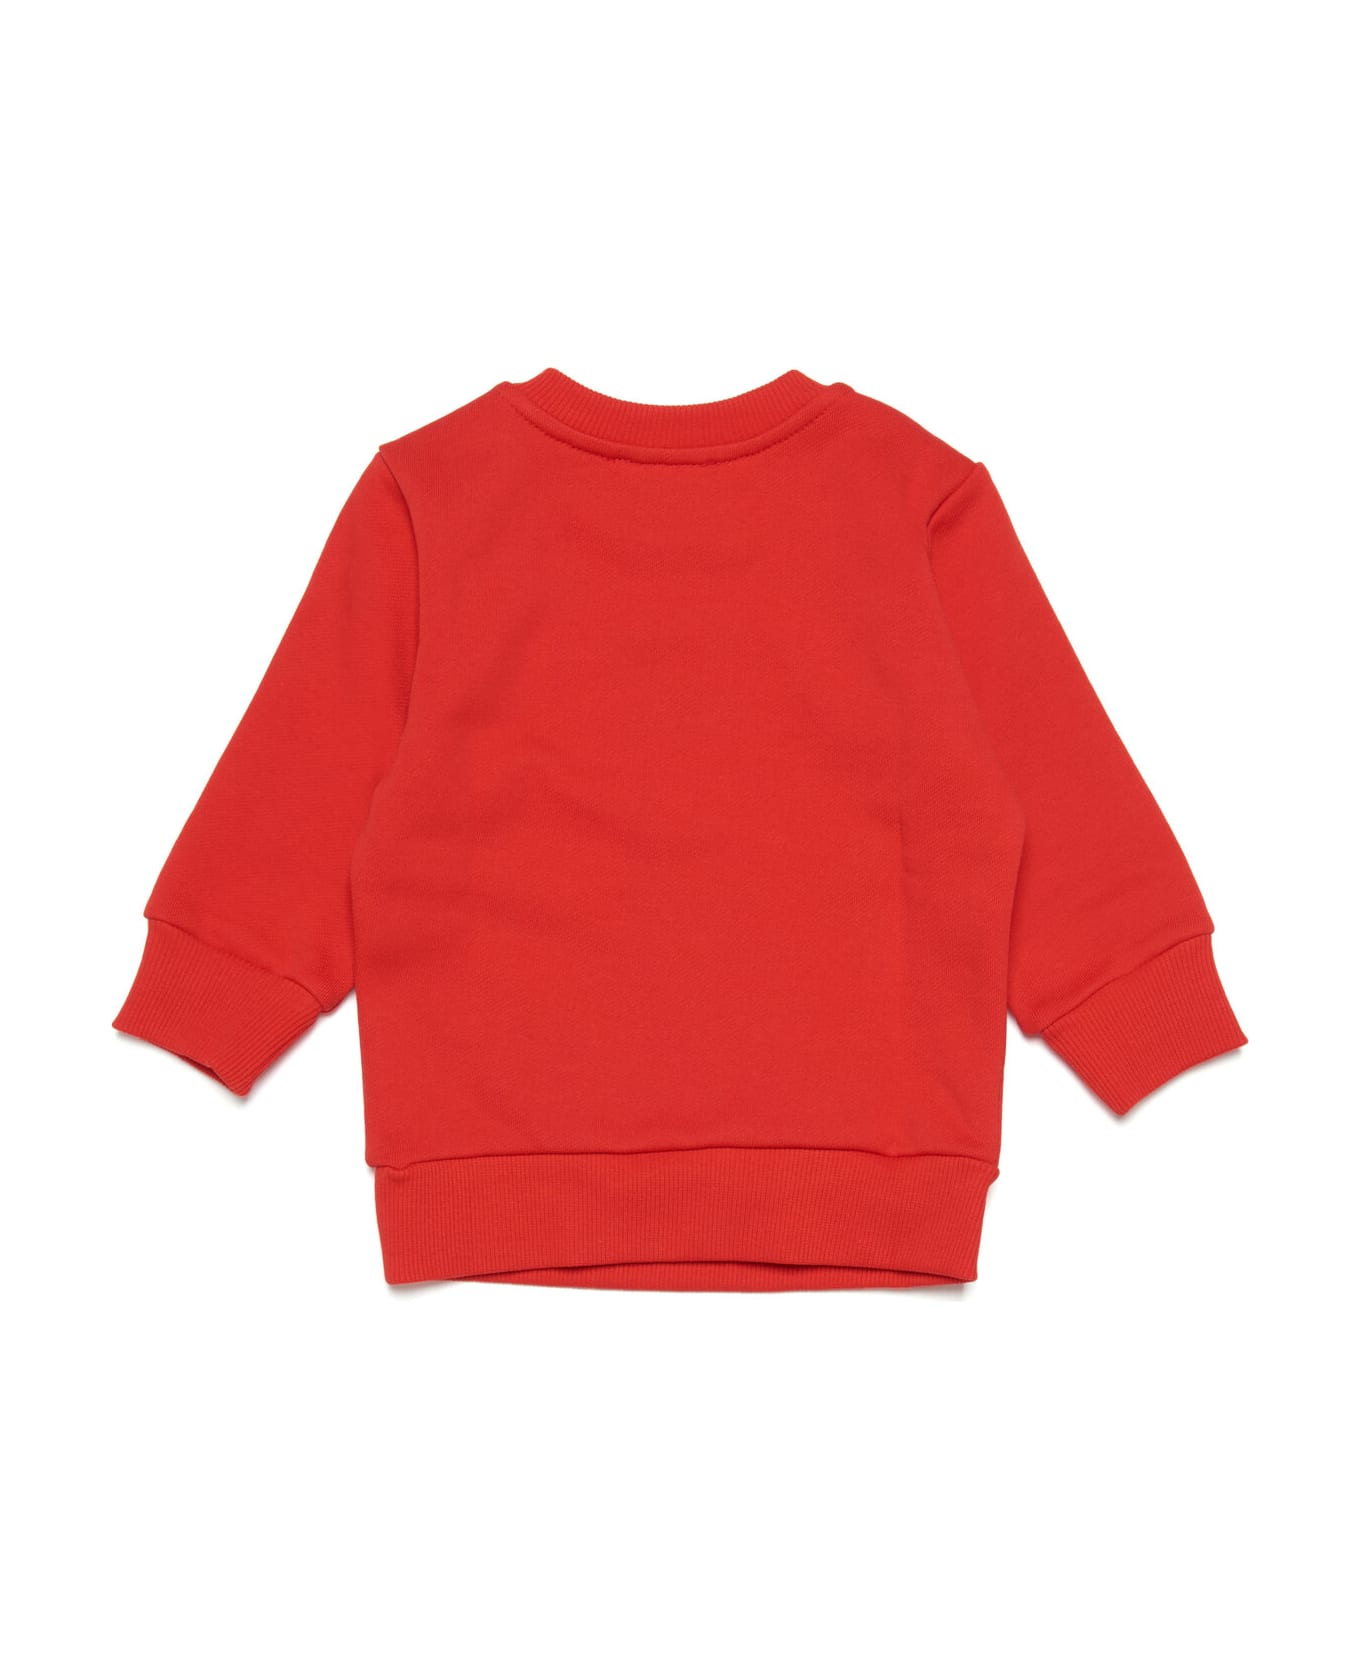 Diesel Sgonyb Sweat-shirt Diesel Red Crew-neck Cotton Sweatshirt With Extra-large Logo - Carnation red